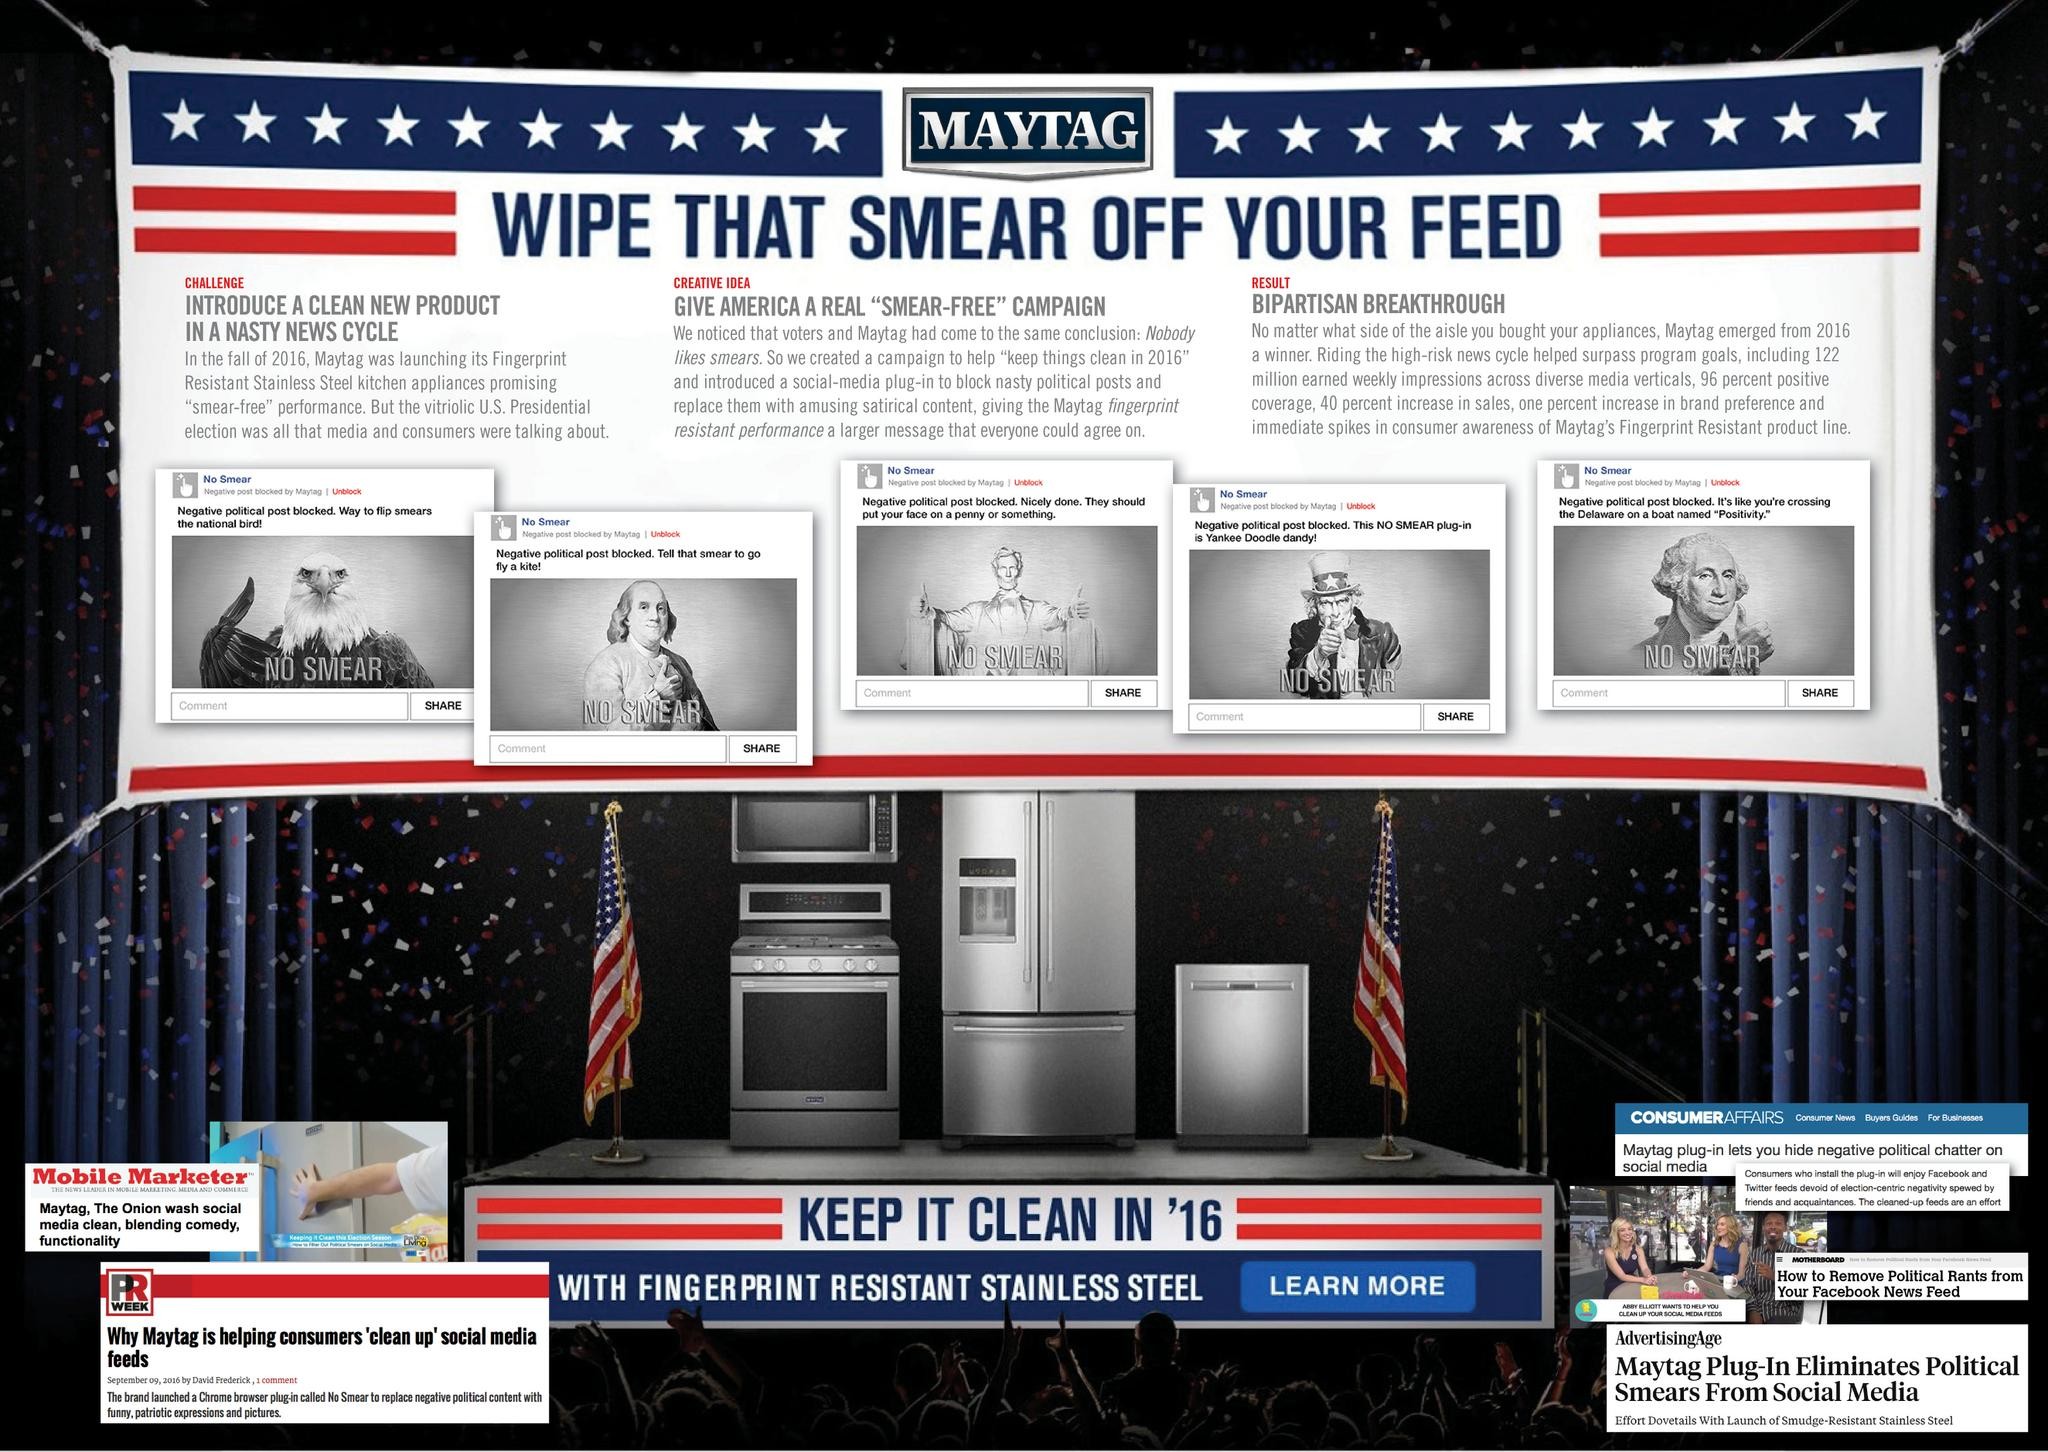 Maytag "No Smear" Campaign